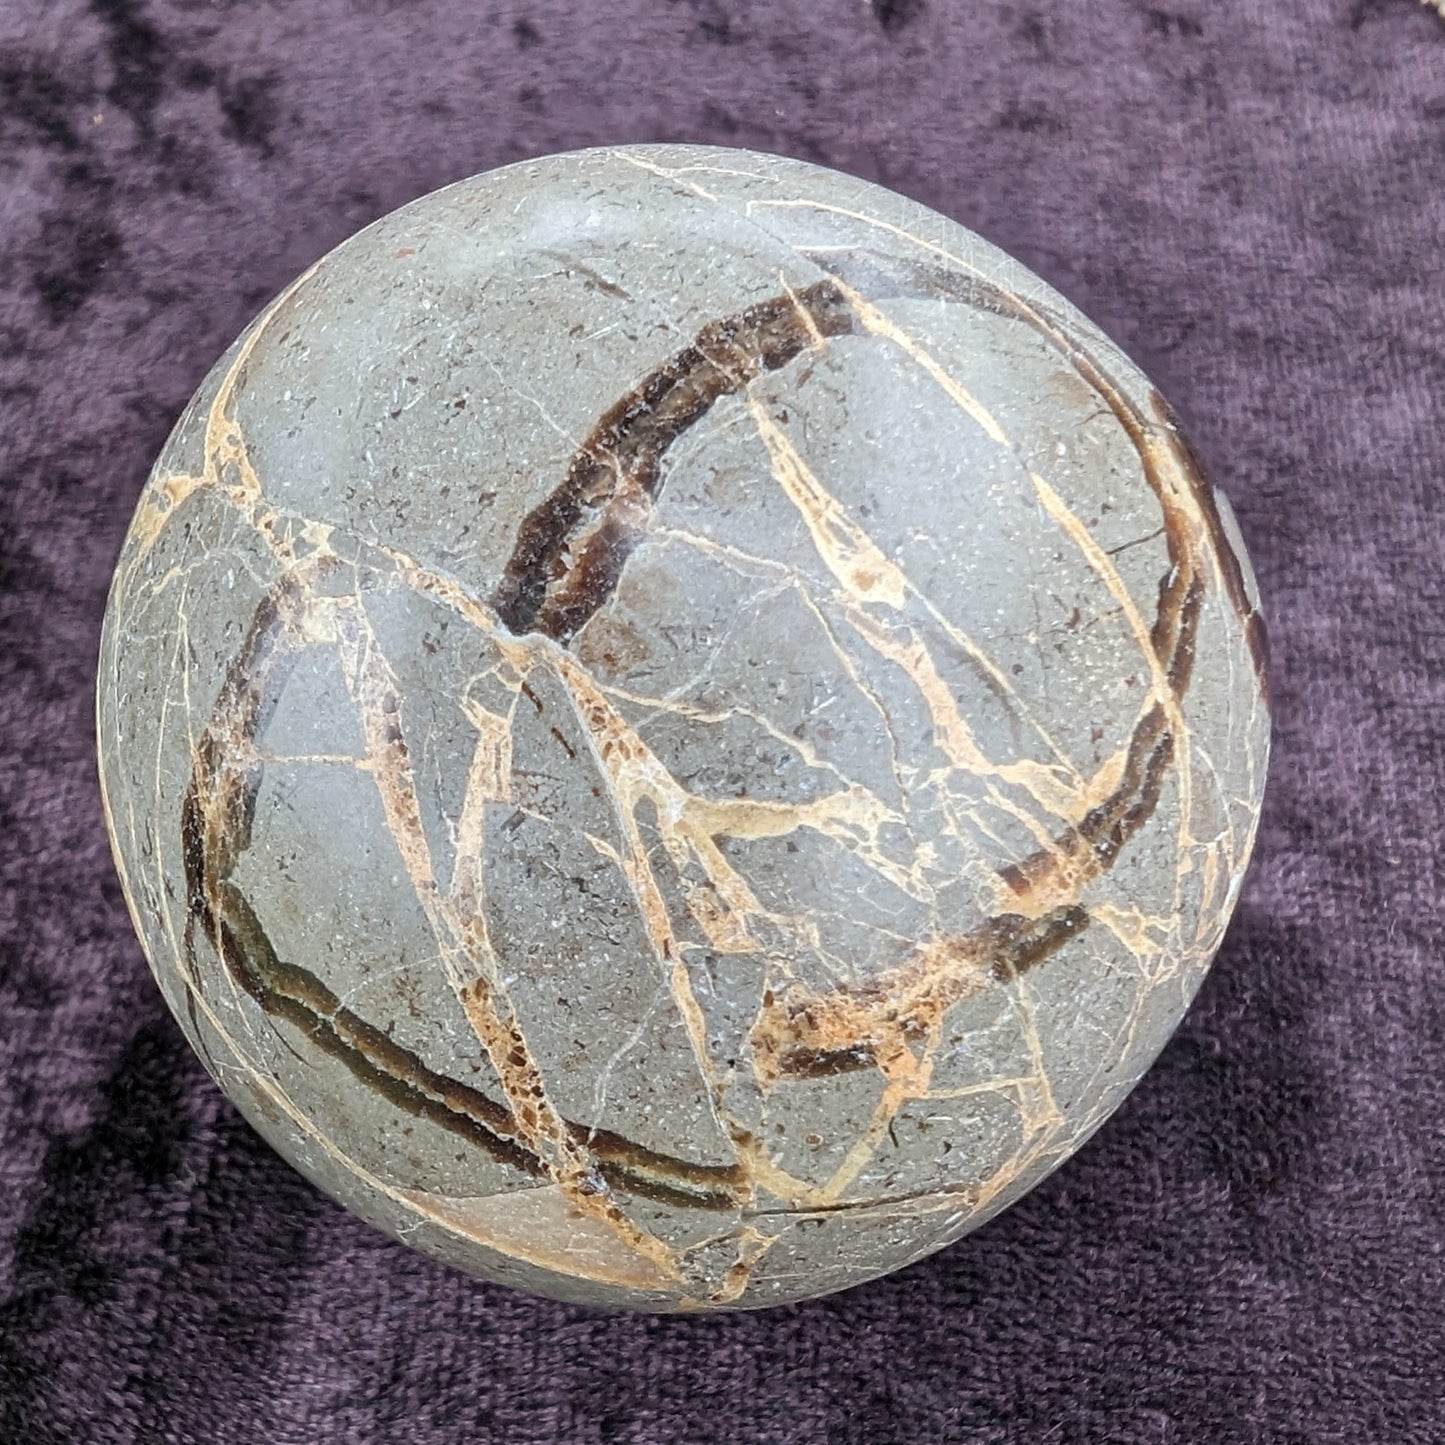 Septarian Dragon Stone sphere 51mm 197g